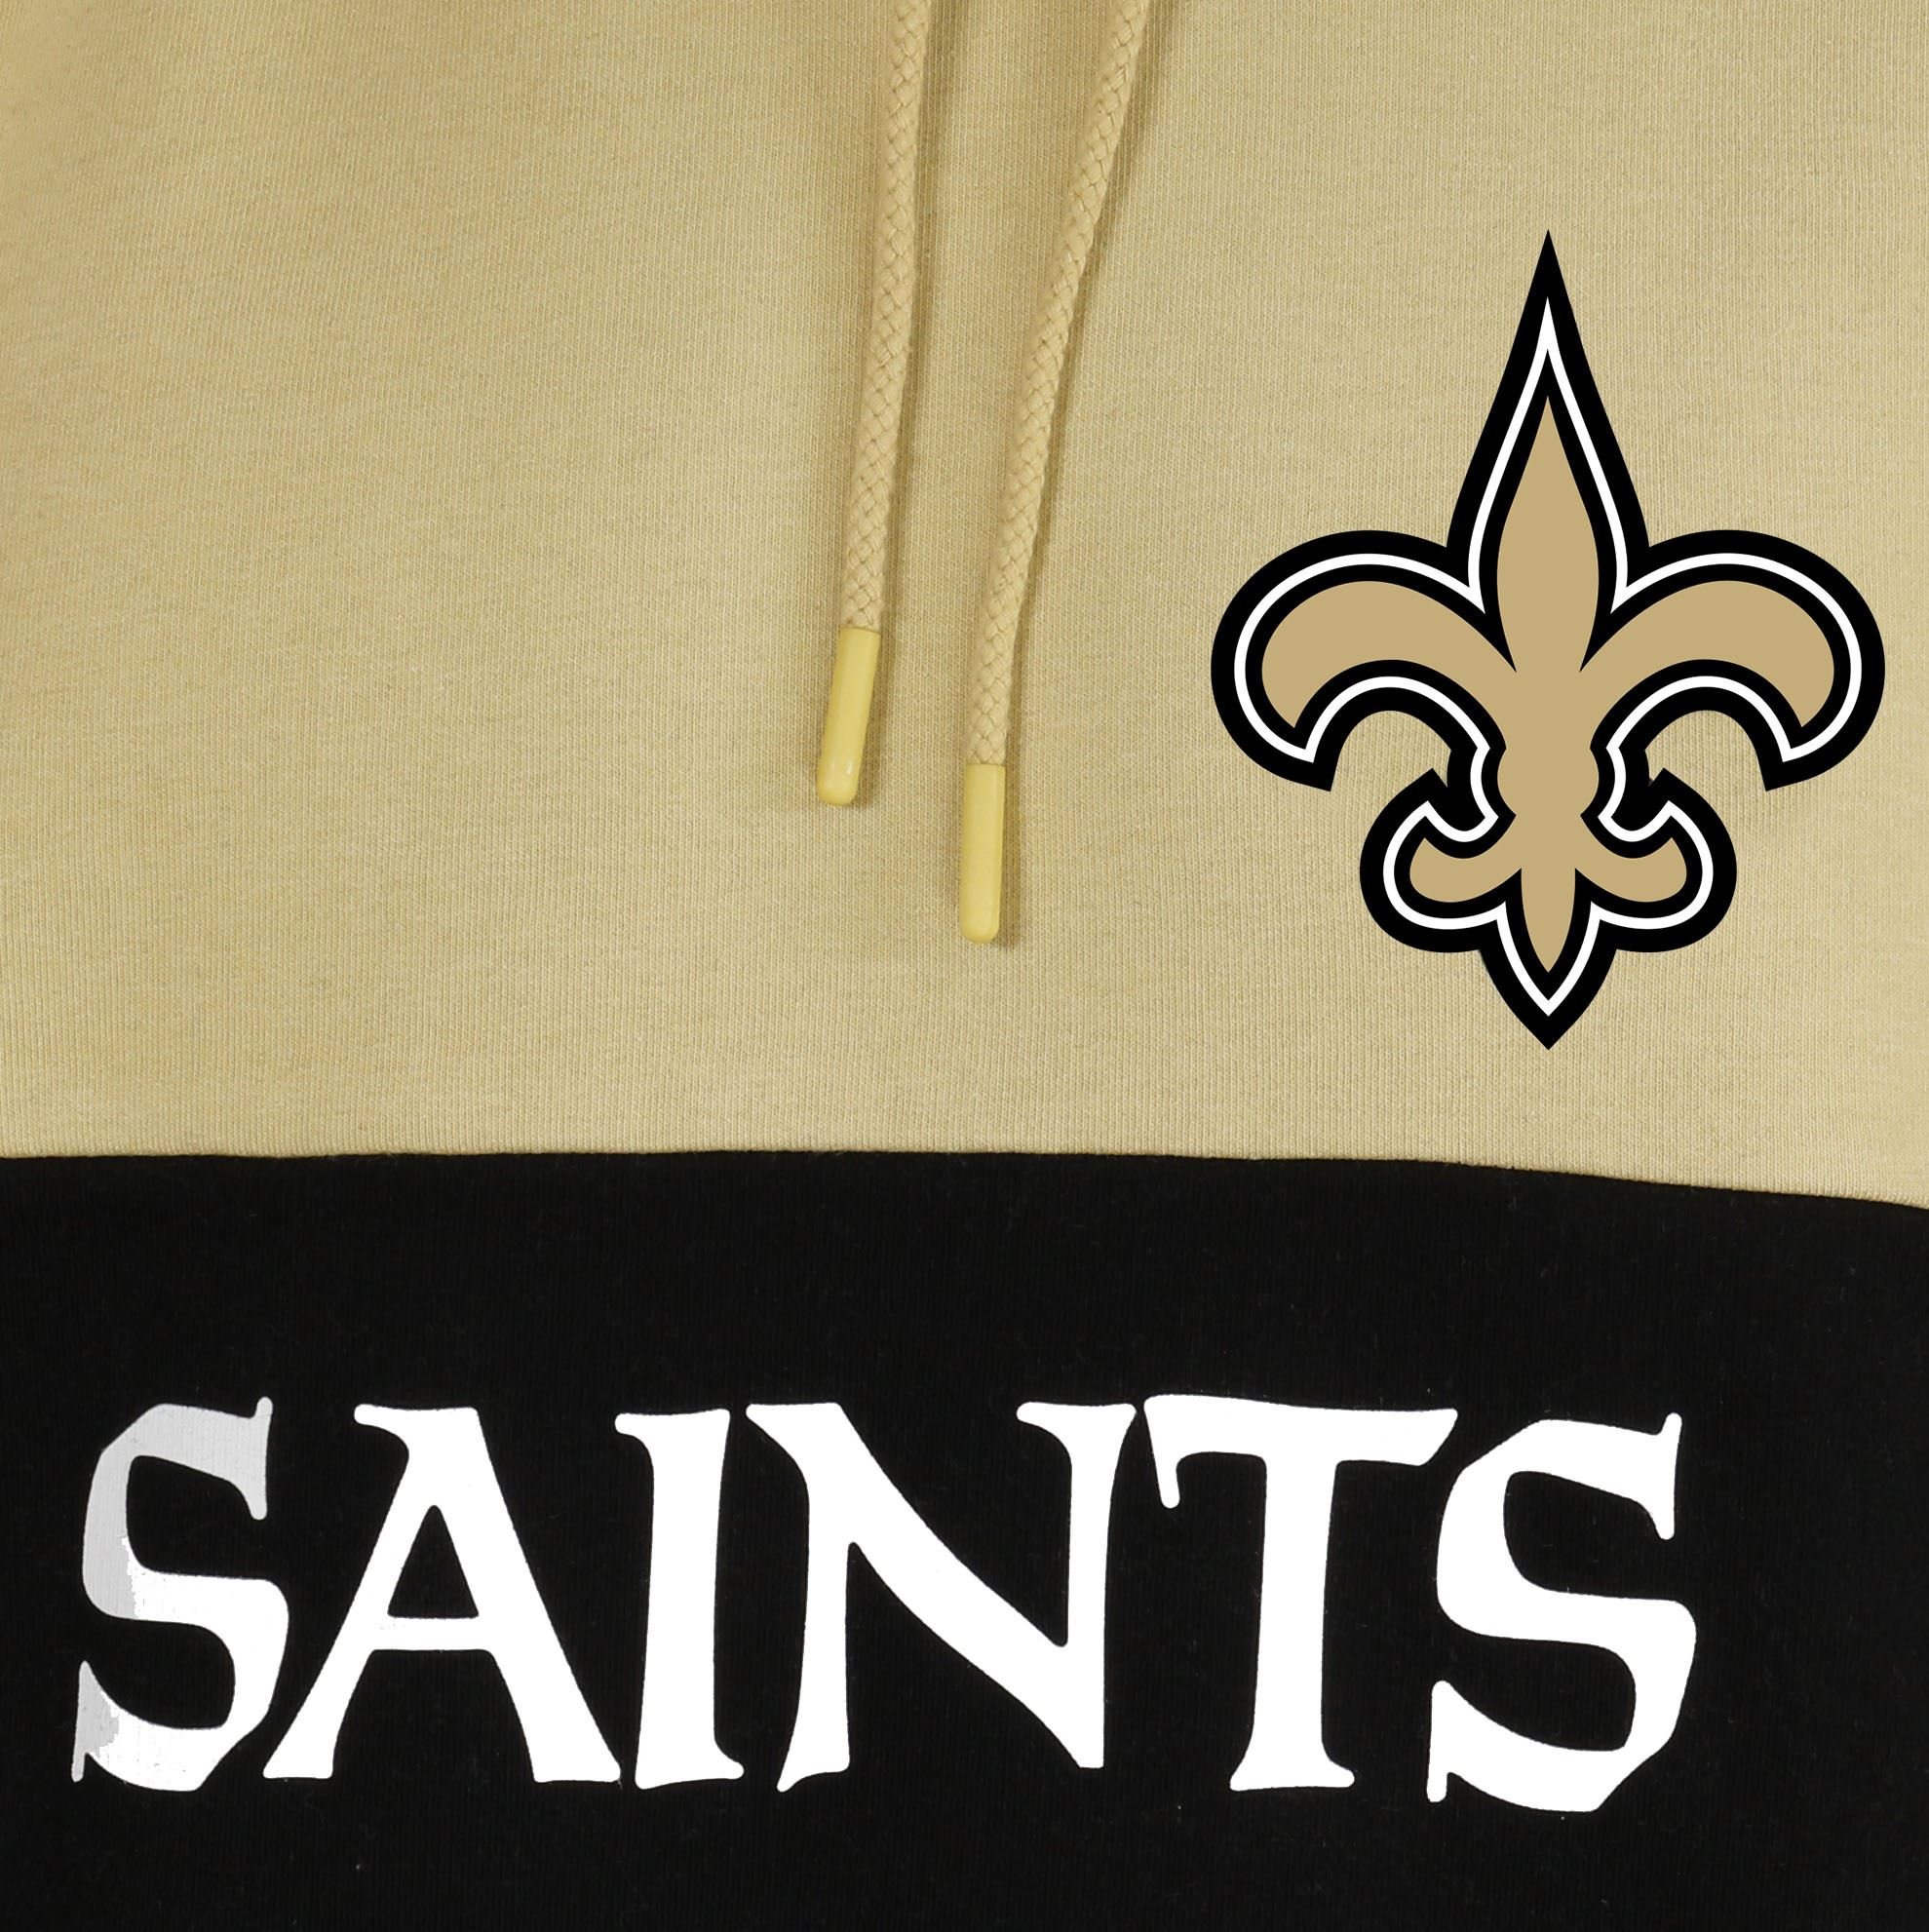 New Orleans Saints NFL Colour Block Hoody Beige / Black New Era